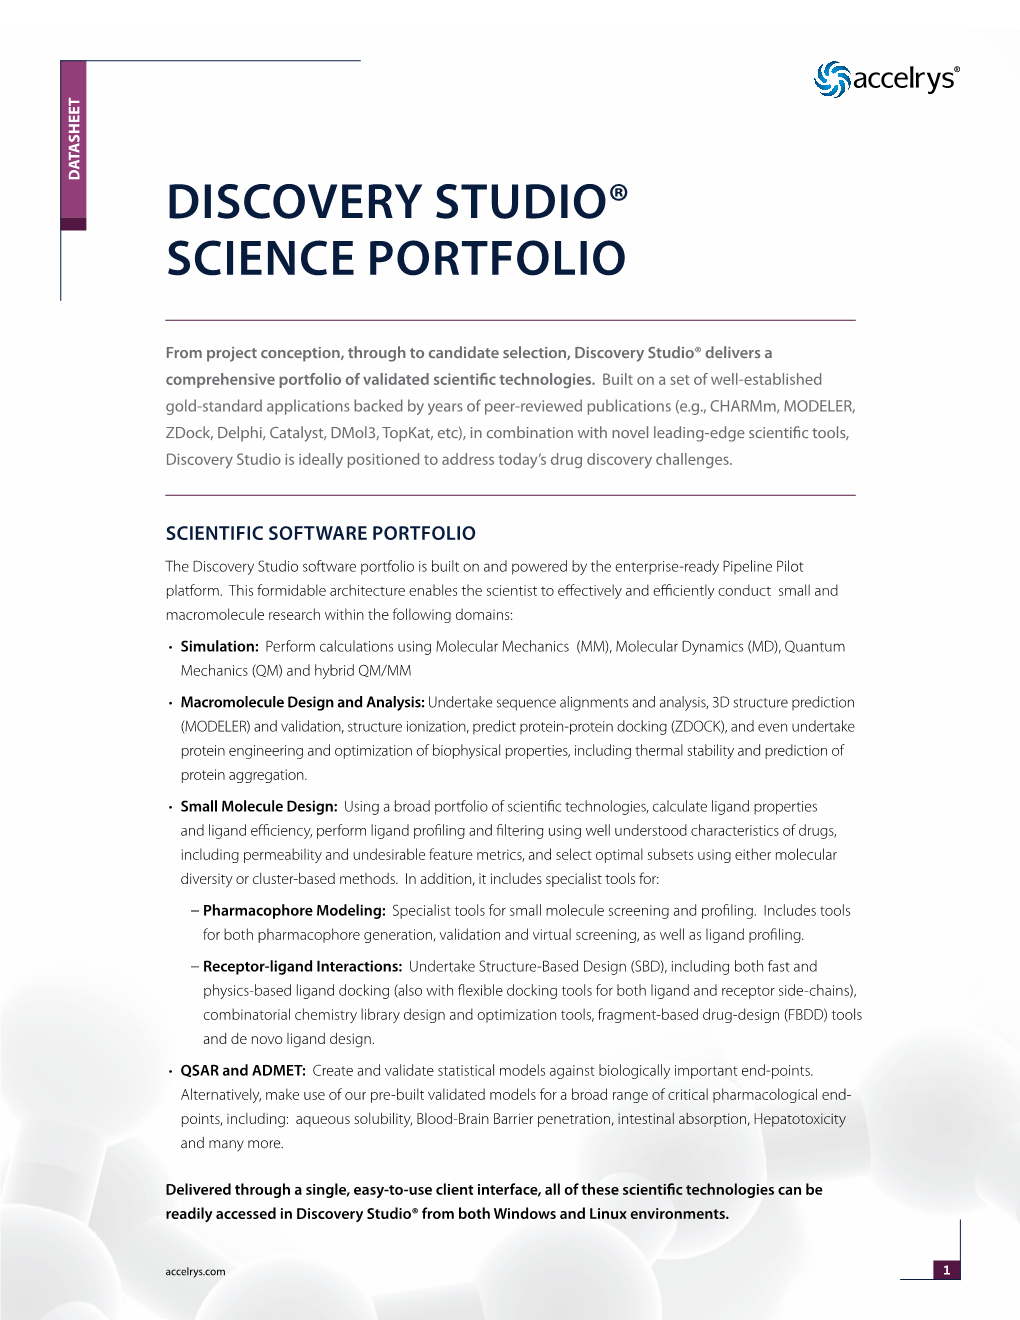 Discovery Studio® Science Portfolio